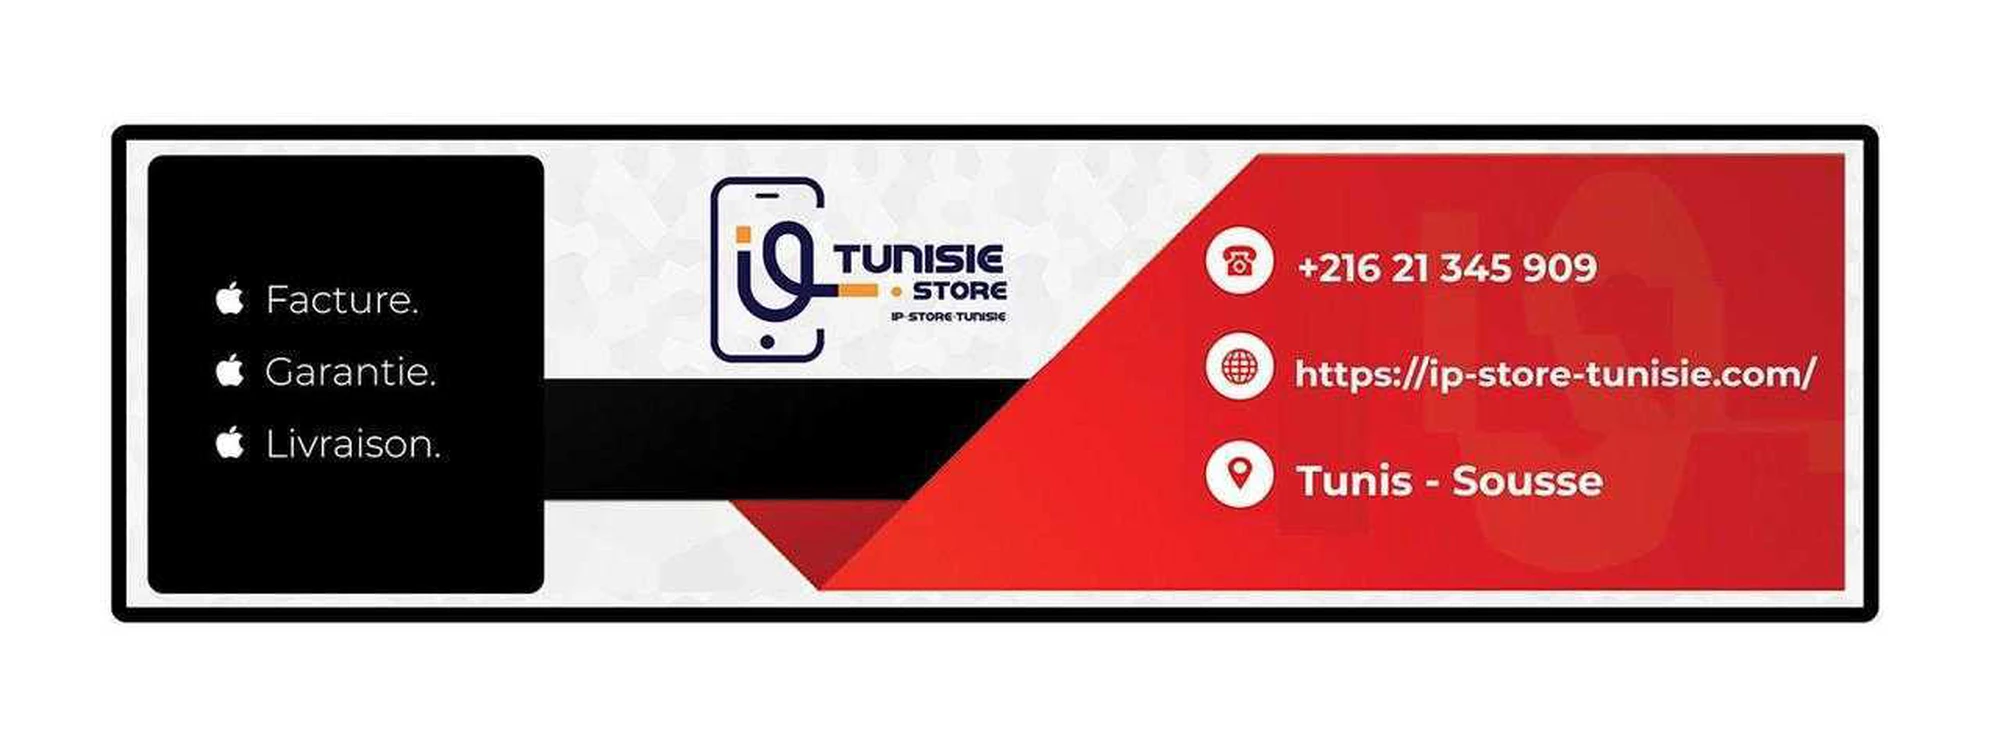 tayara shop cover of IP Store Tunisie